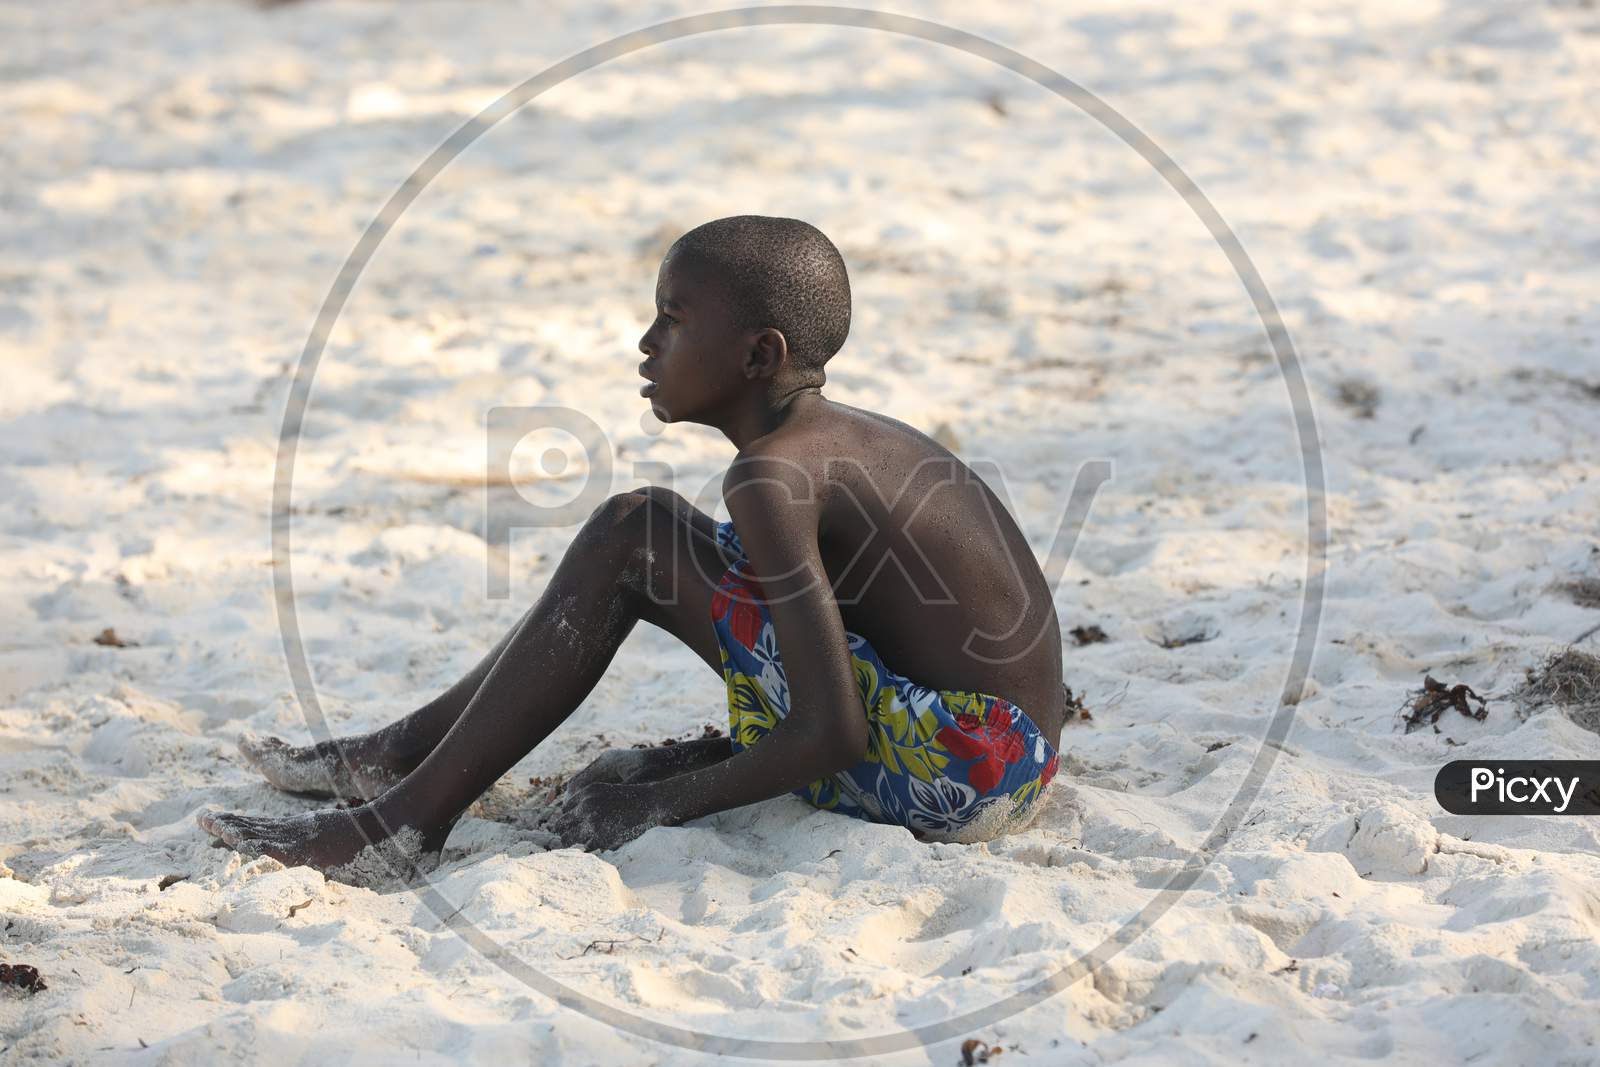 A Kenya boy sitting on the sea shore